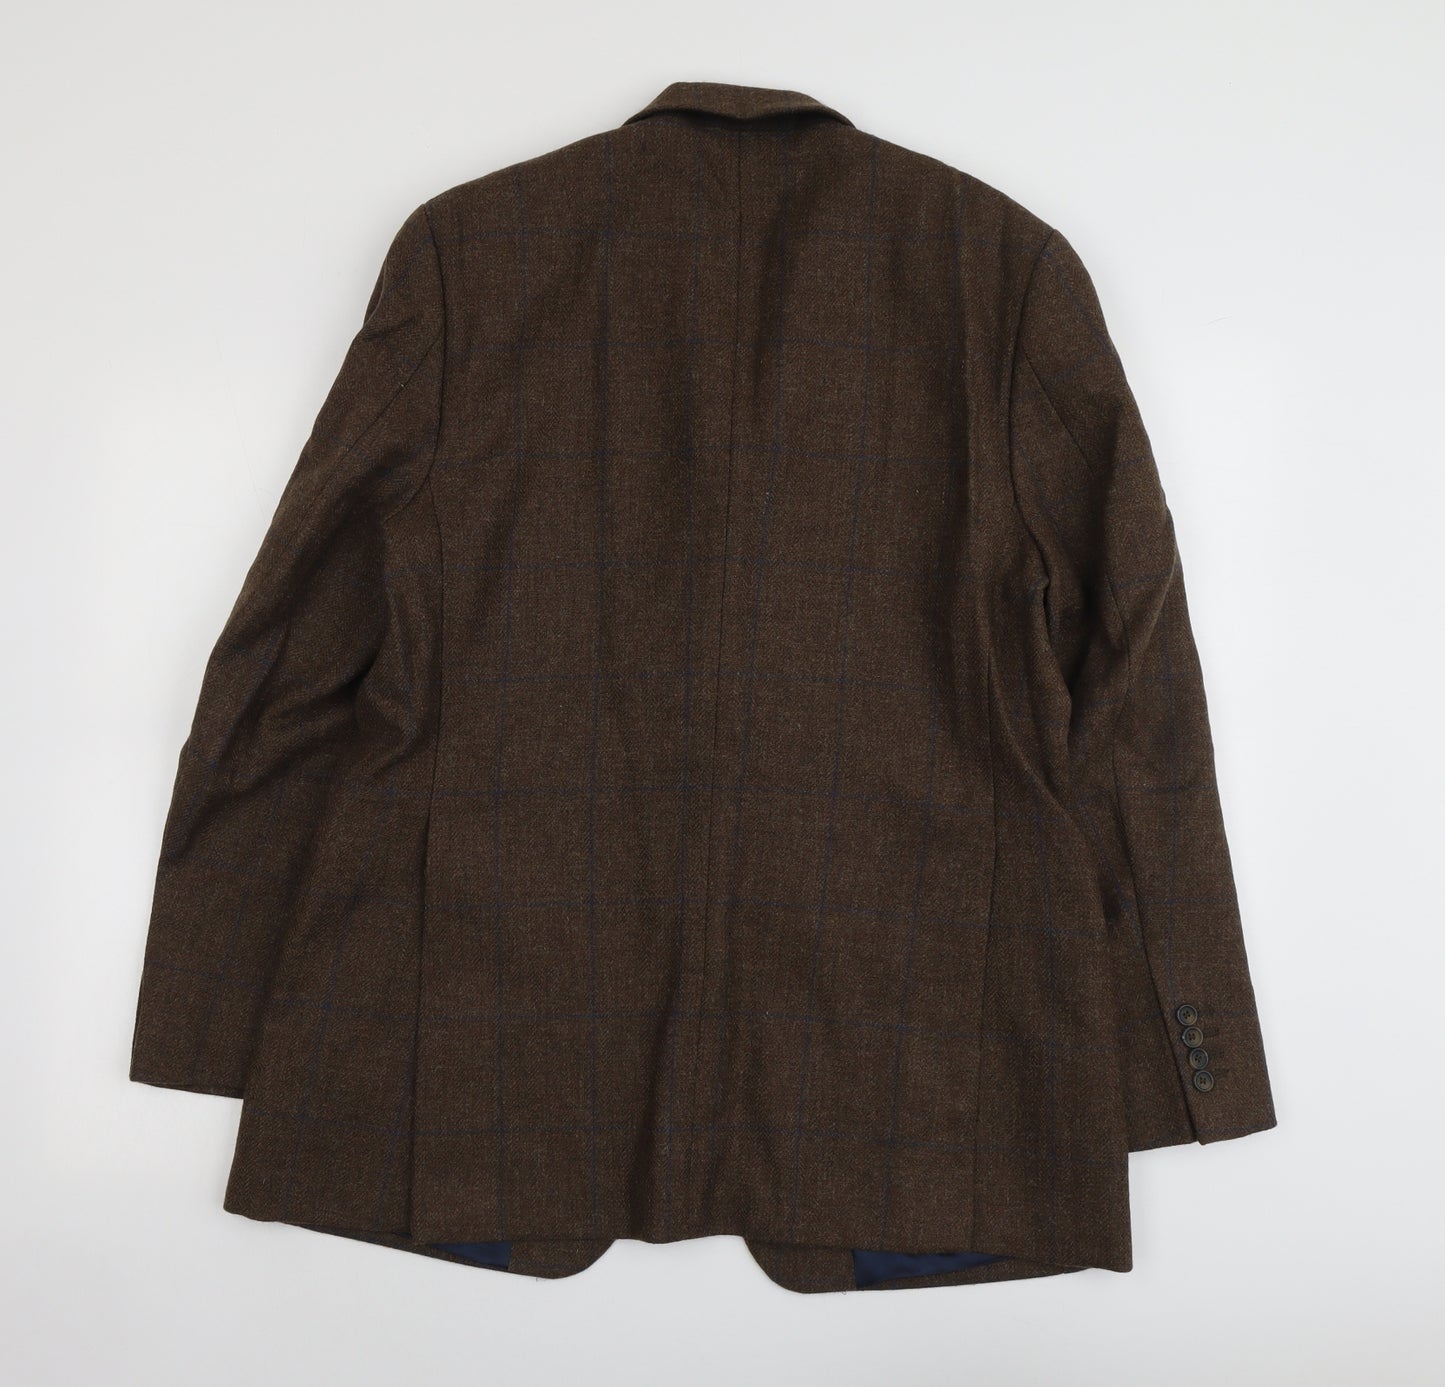 Joseph Turner Mens Brown Check Wool Jacket Blazer Size 40 Regular